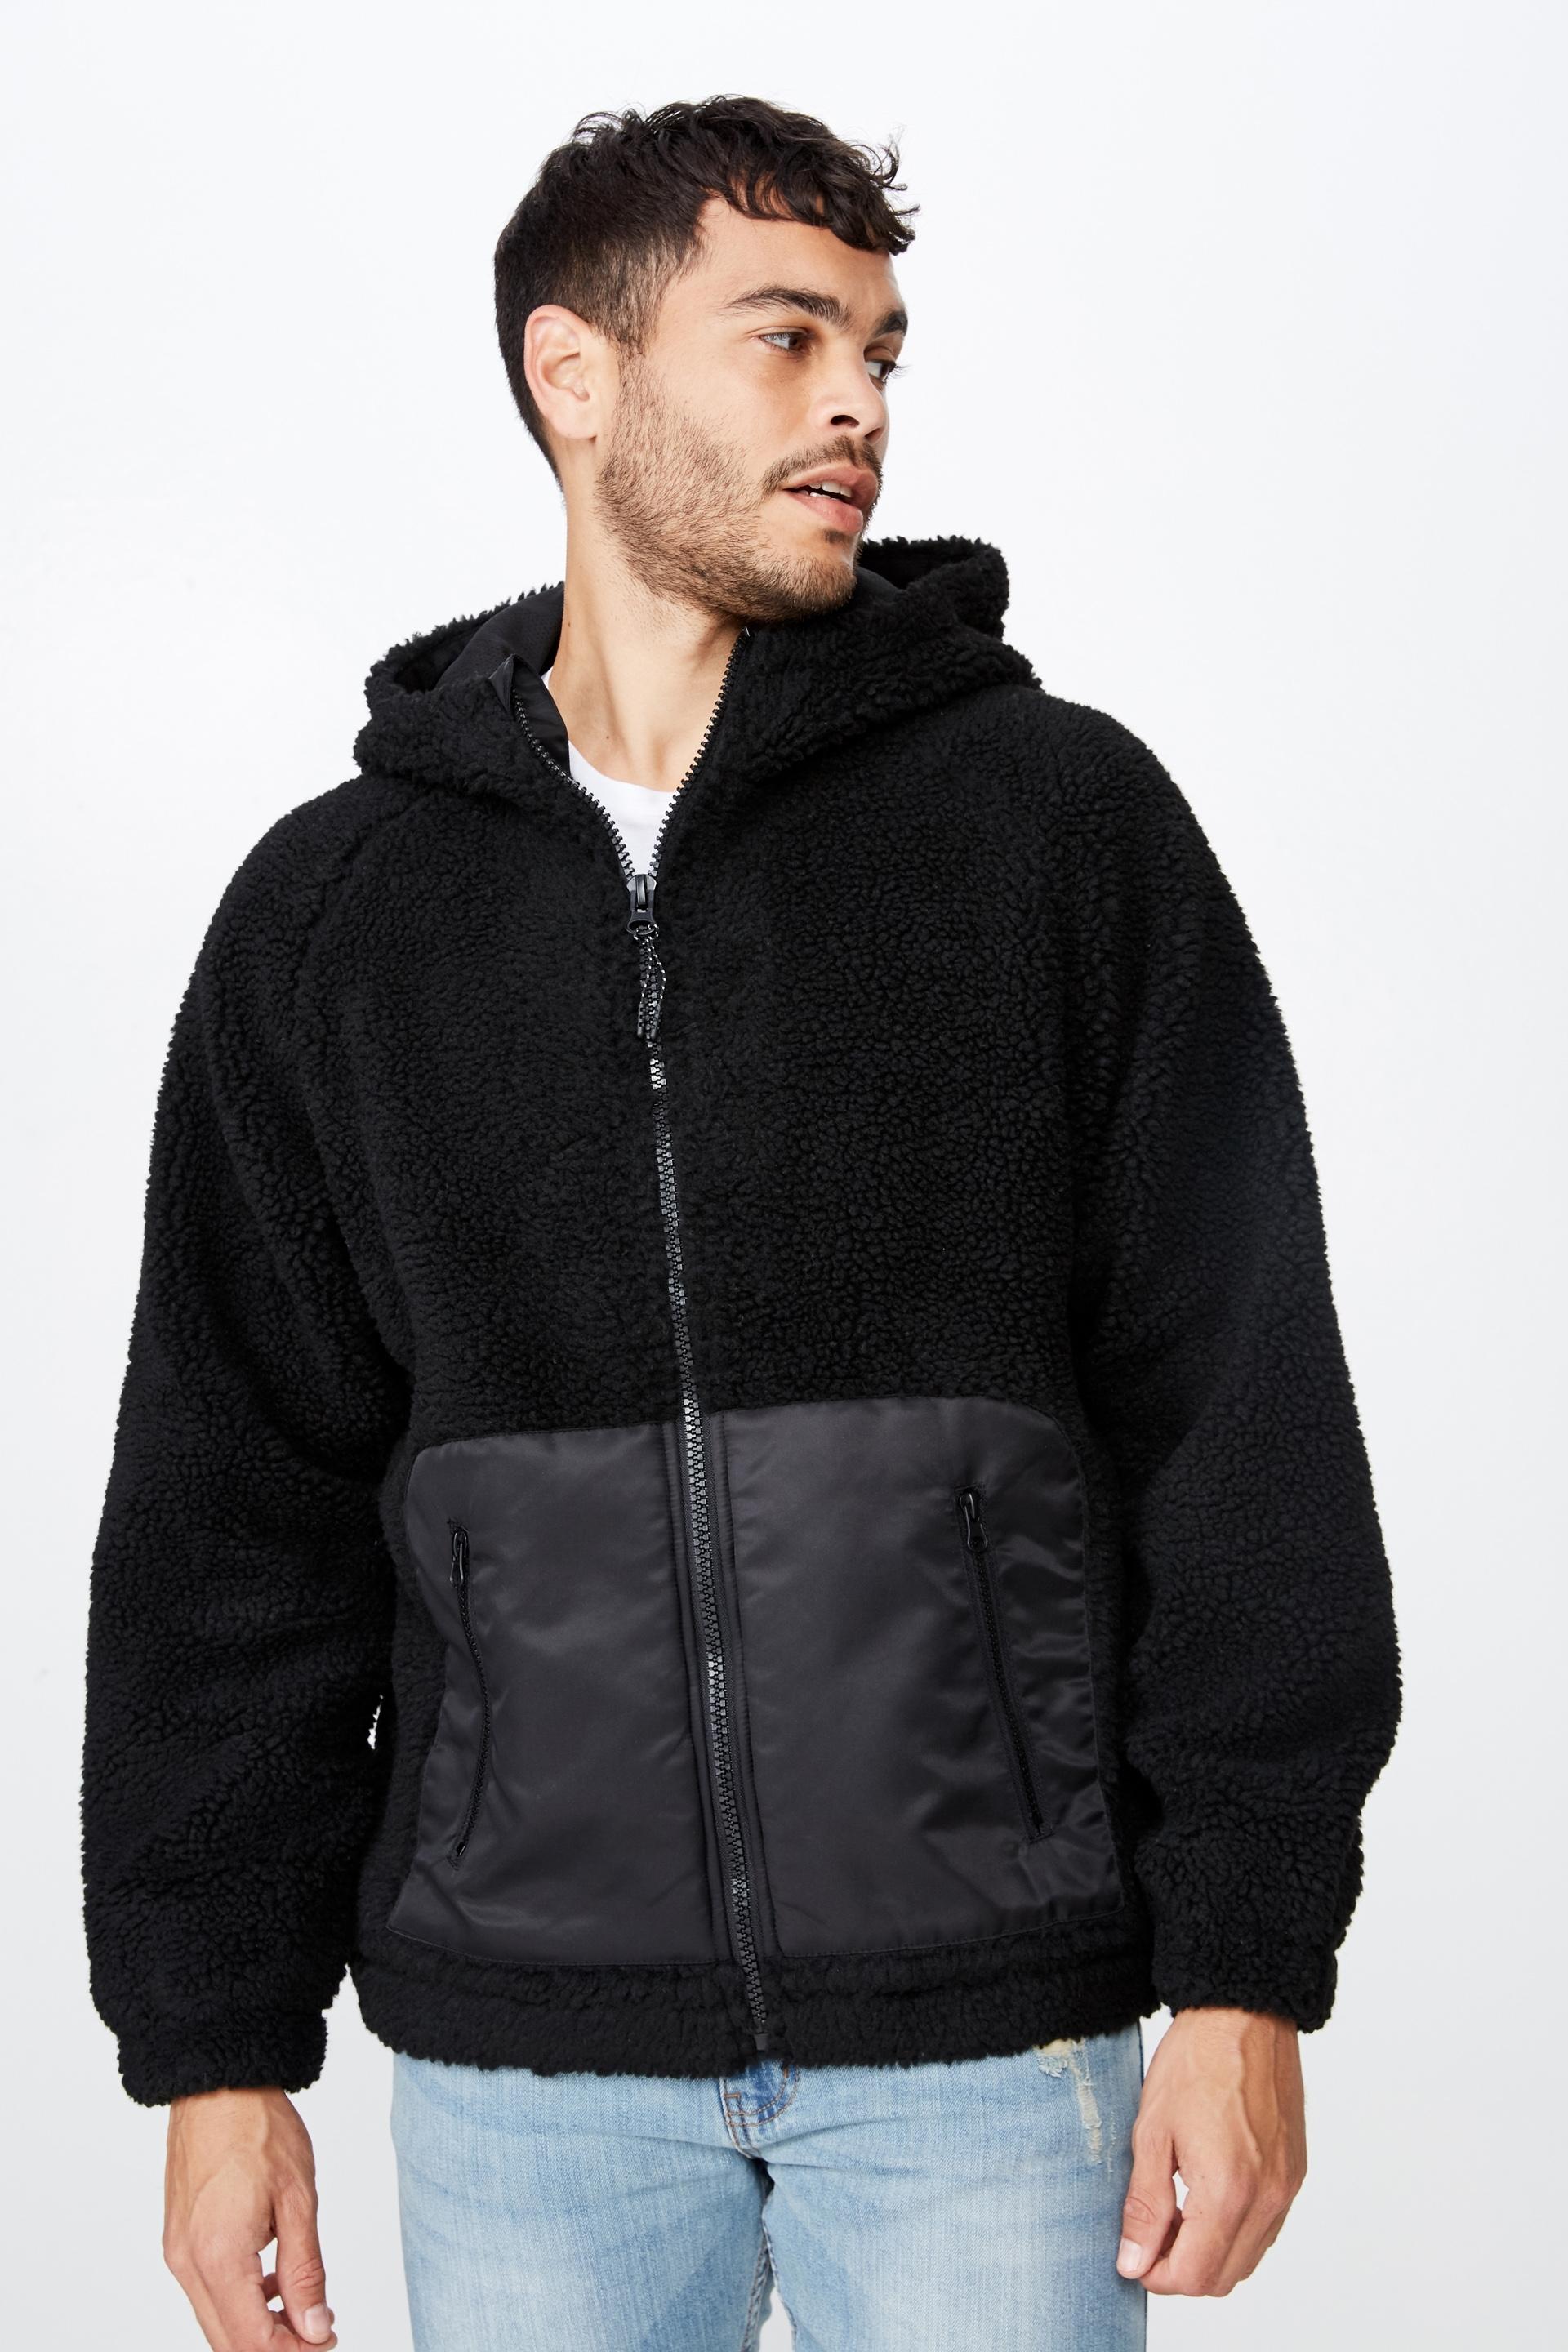 Hooded teddy zip through jacket - black Cotton On Jackets | Superbalist.com